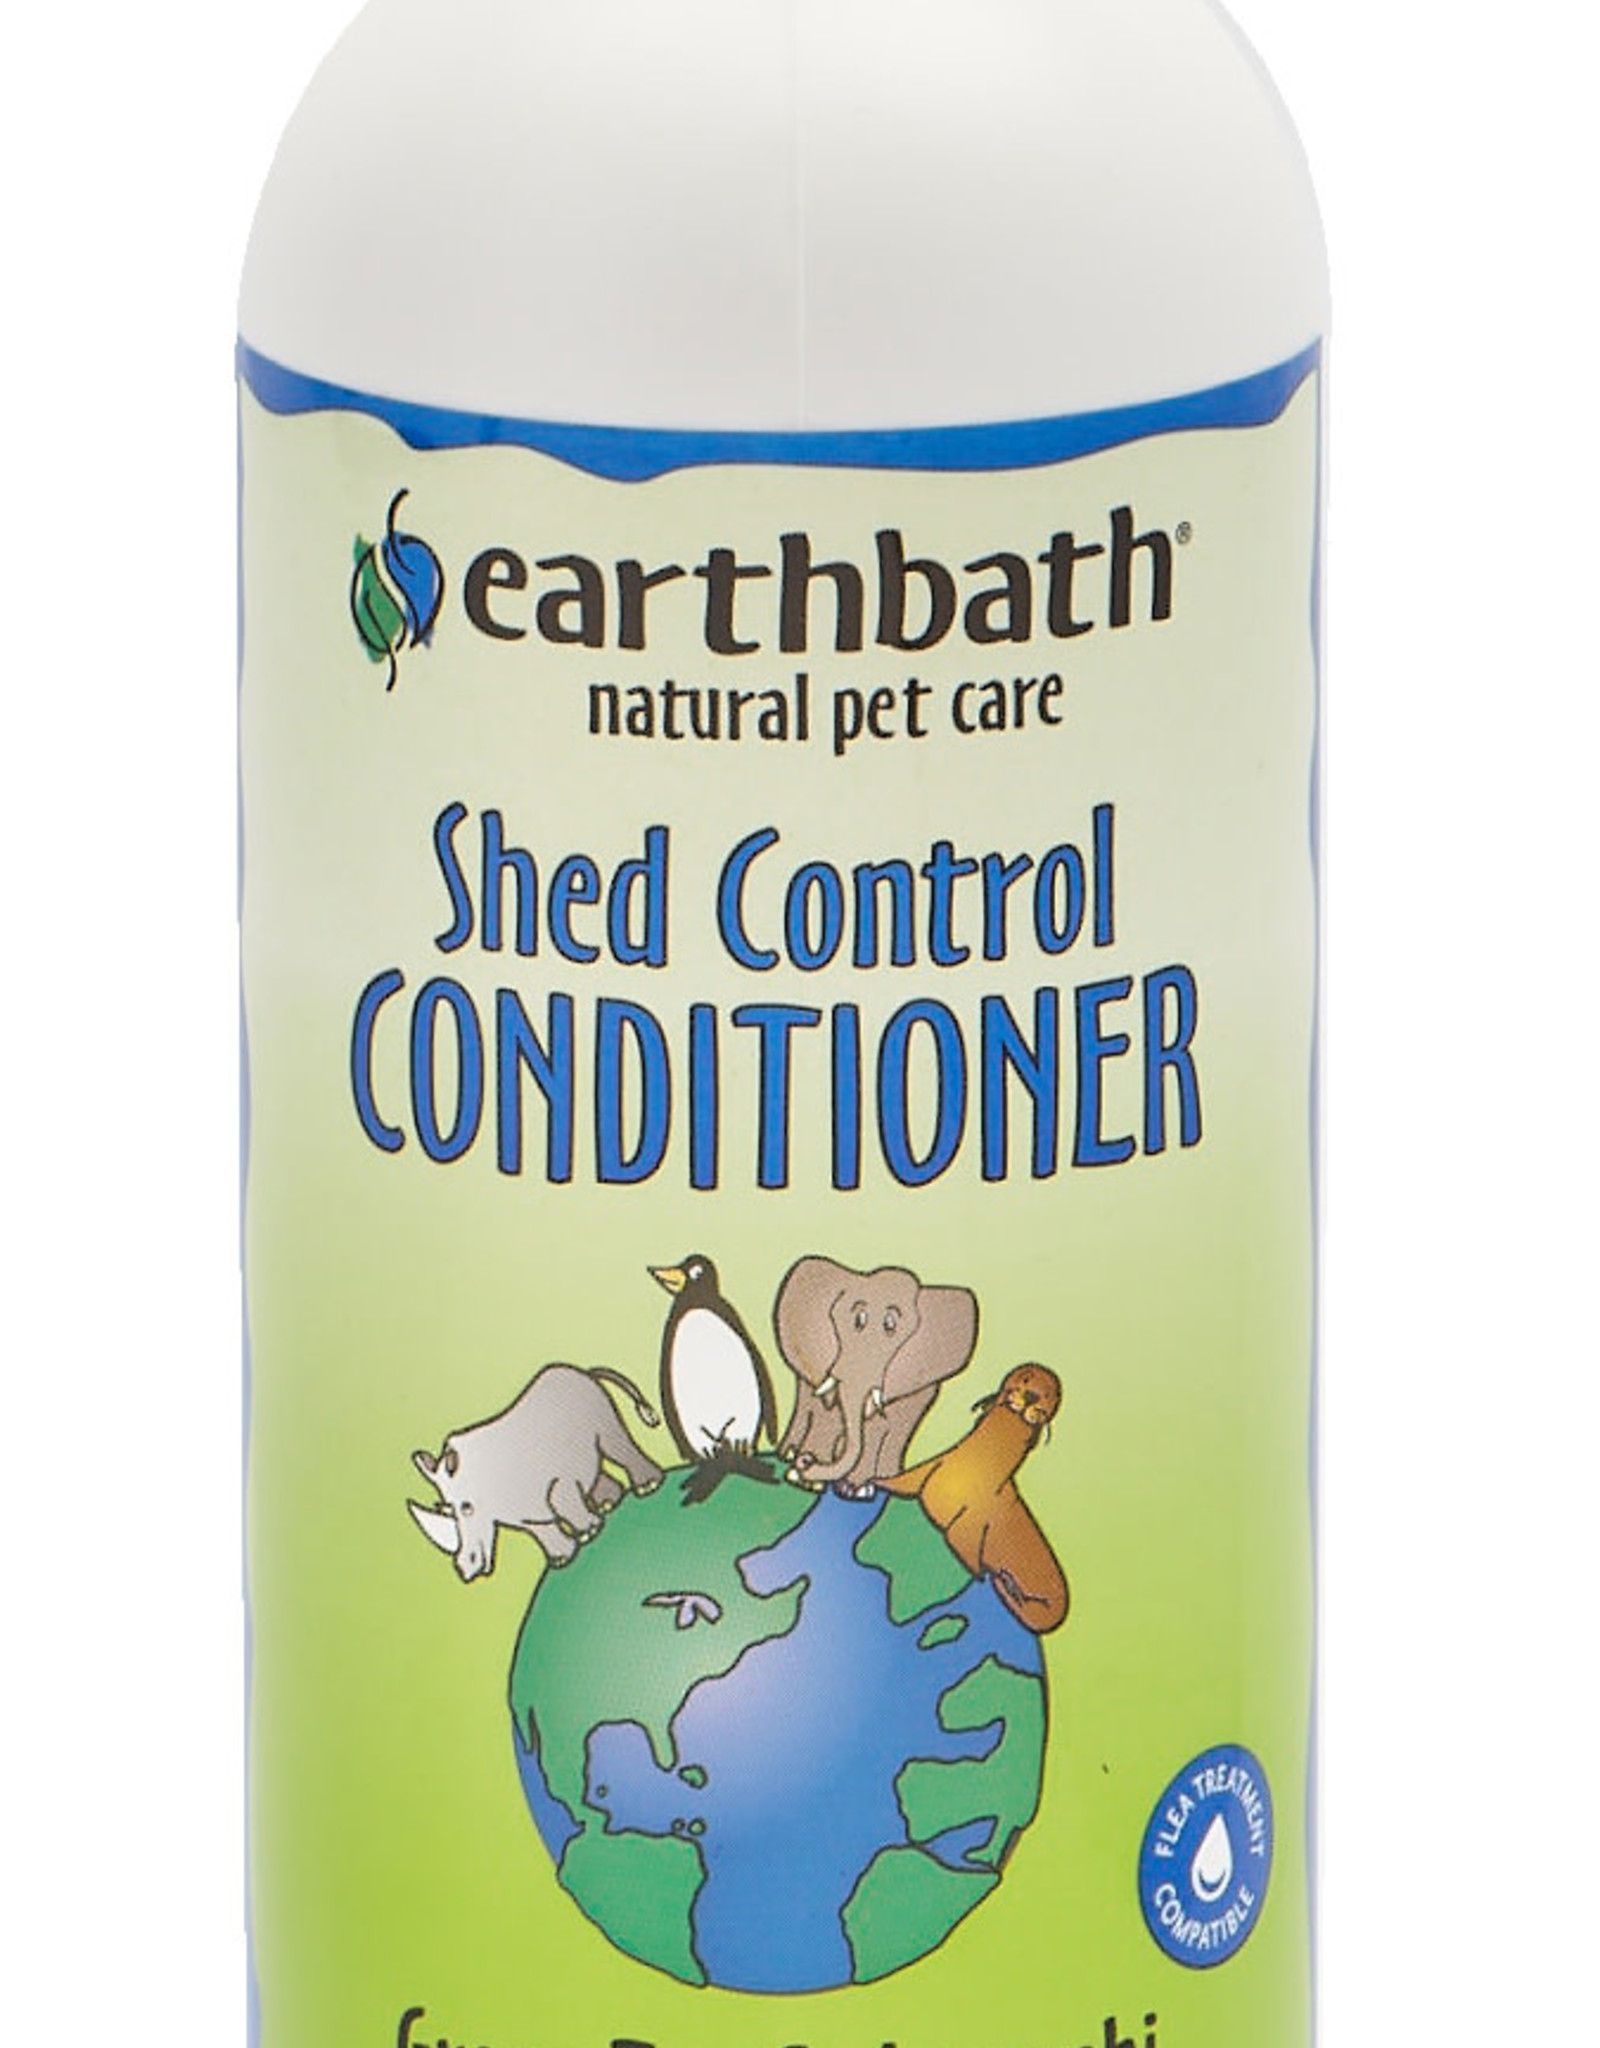 EARTHBATH Earthbath Shed Control Green Tea & Awapuhi Dog & Cat Conditioner 16 oz